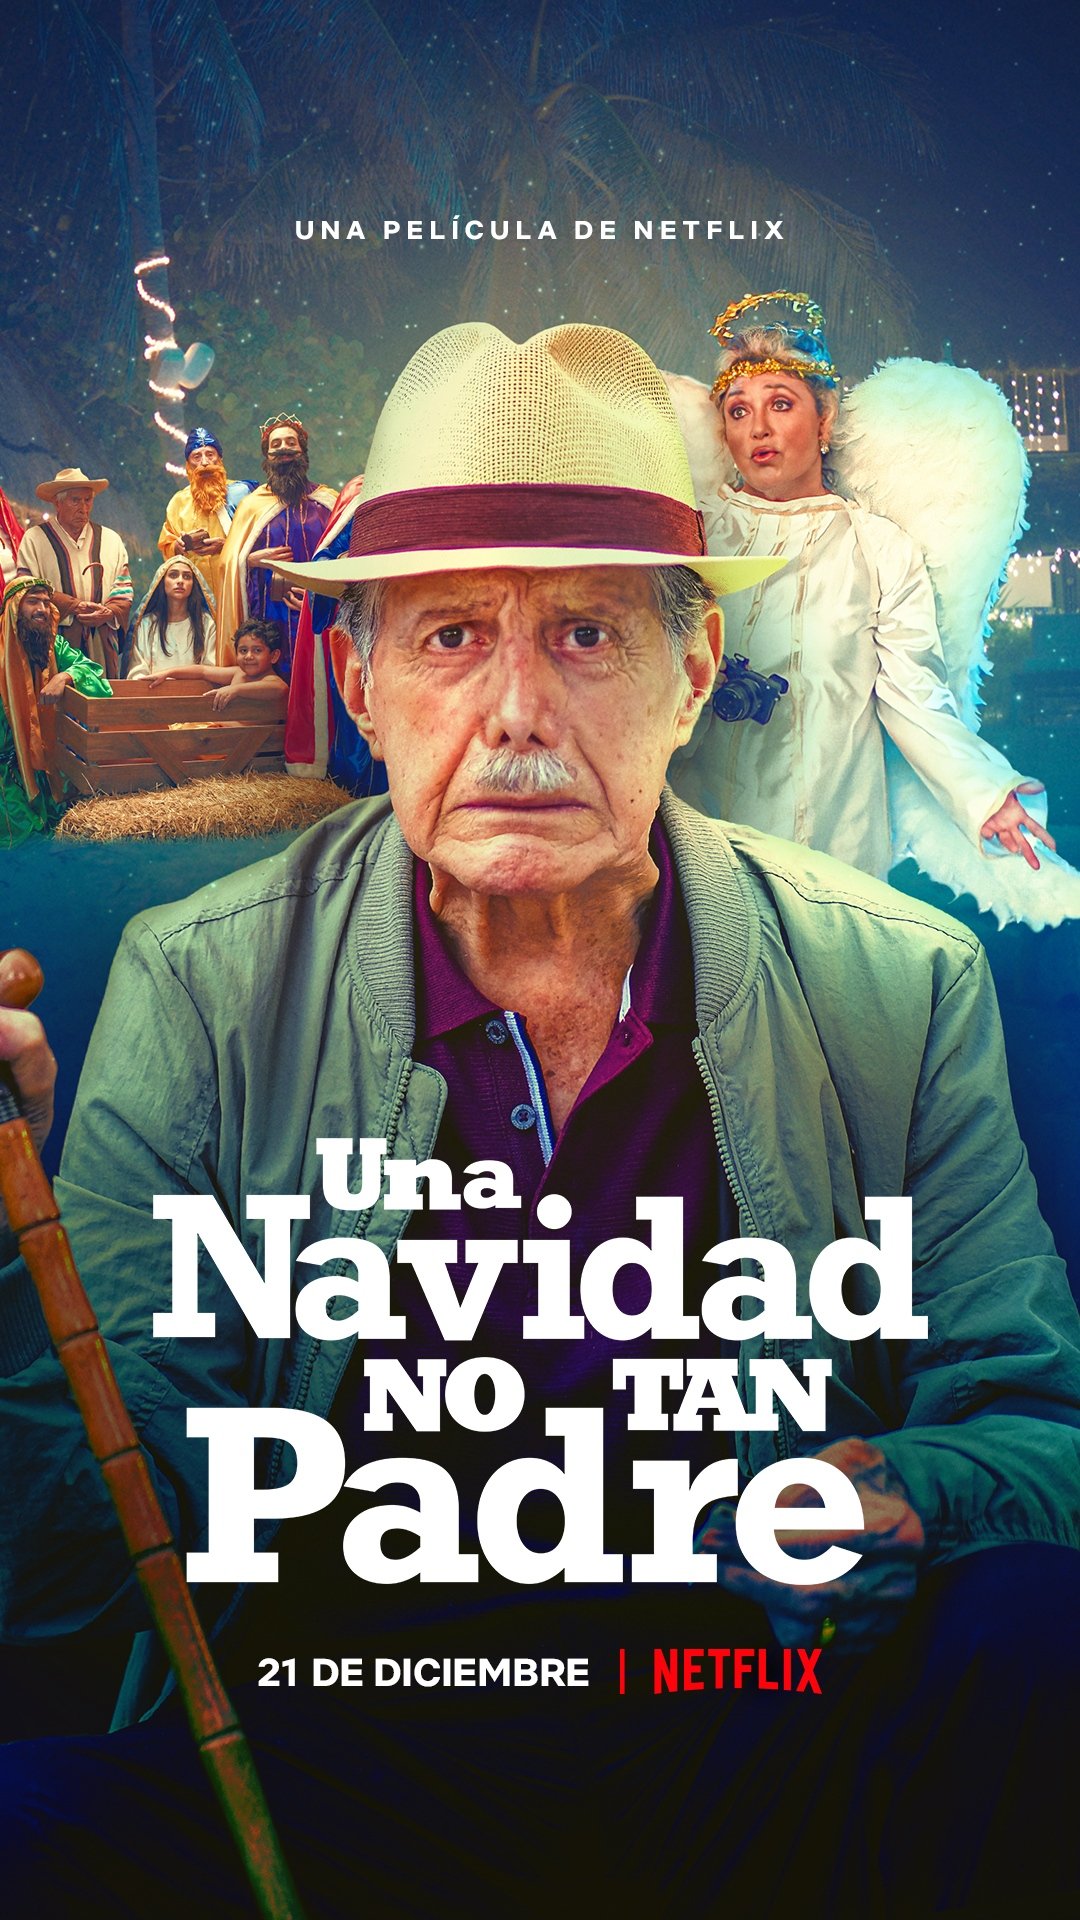 Spanish poster of the movie Grumpy Christmas